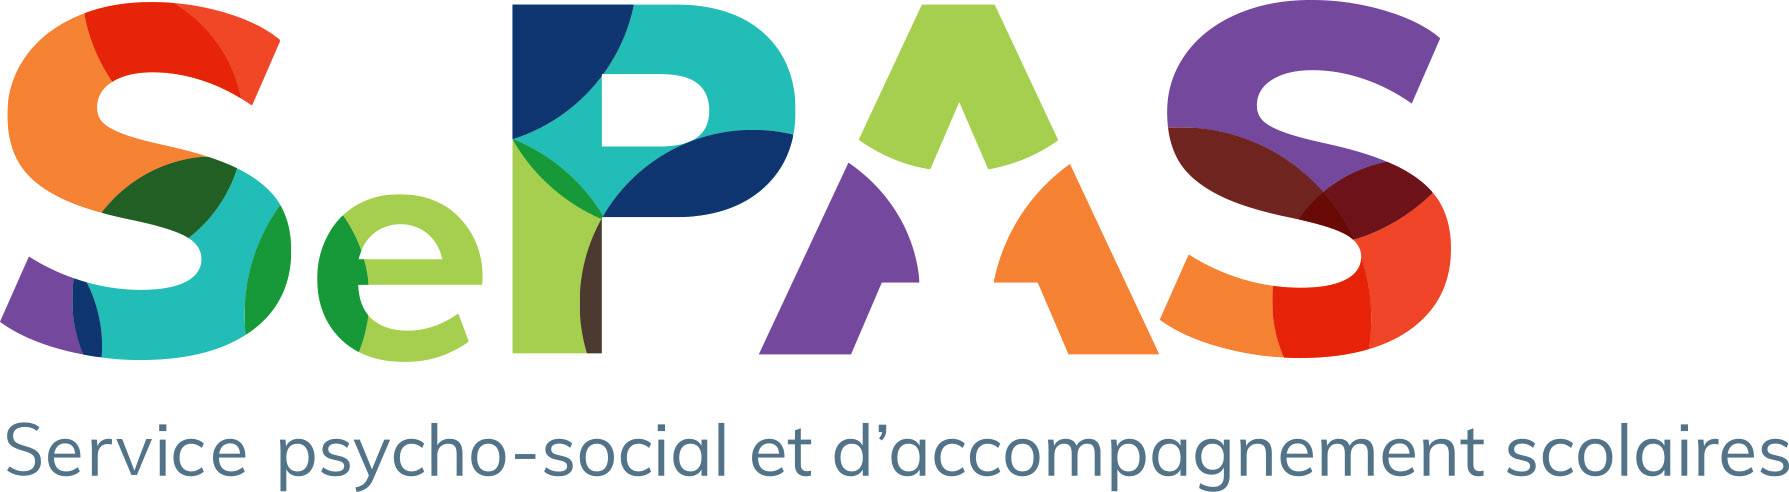 SePAS_logo